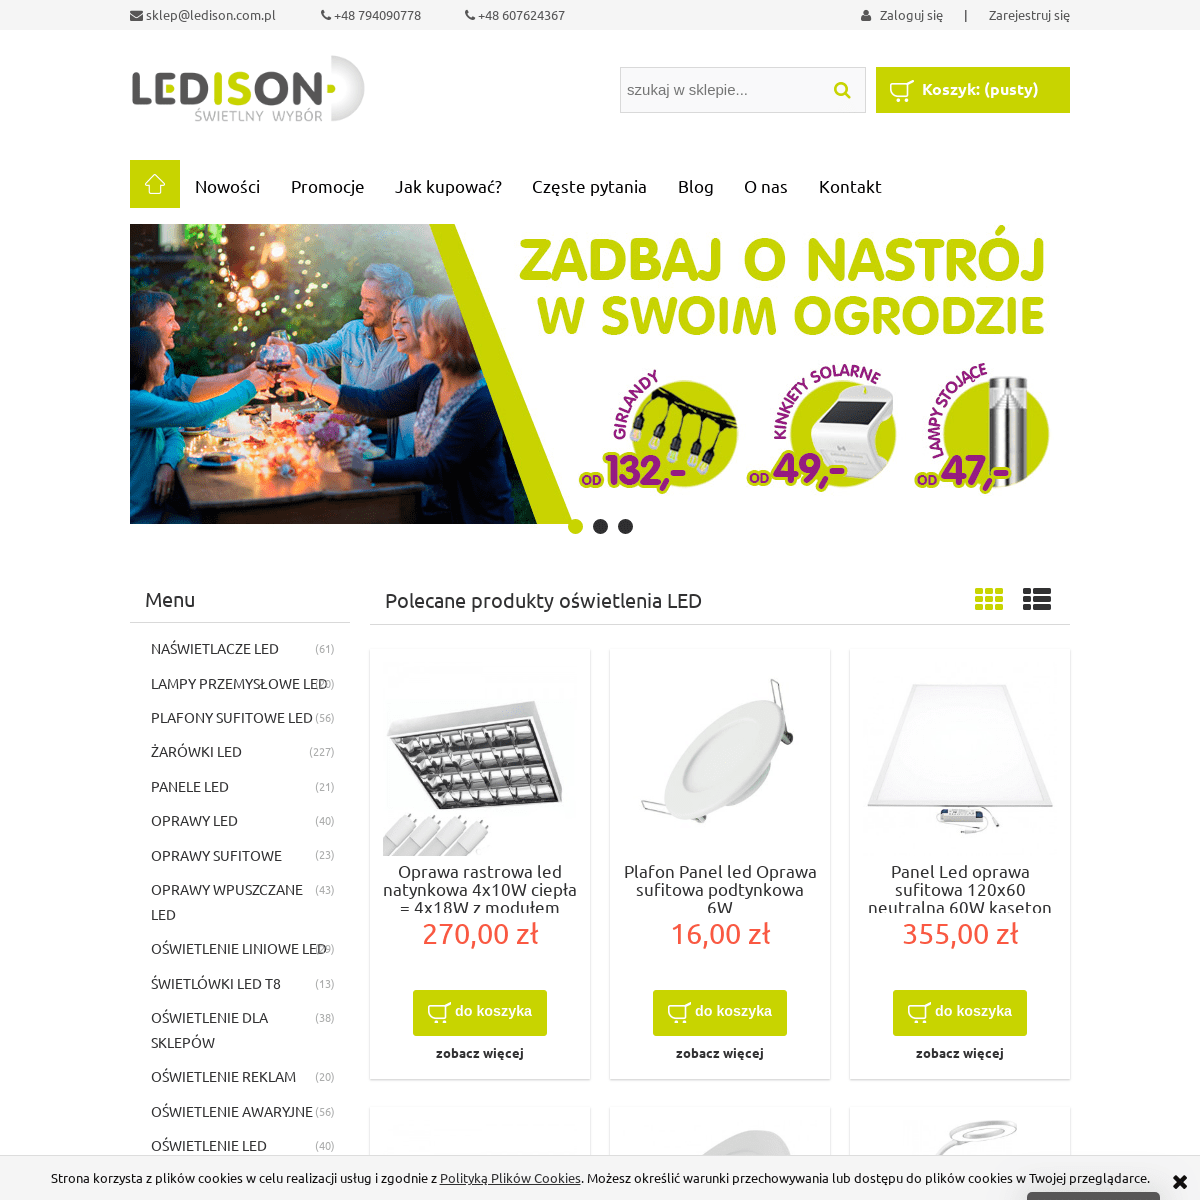 A complete backup of ledison.com.pl